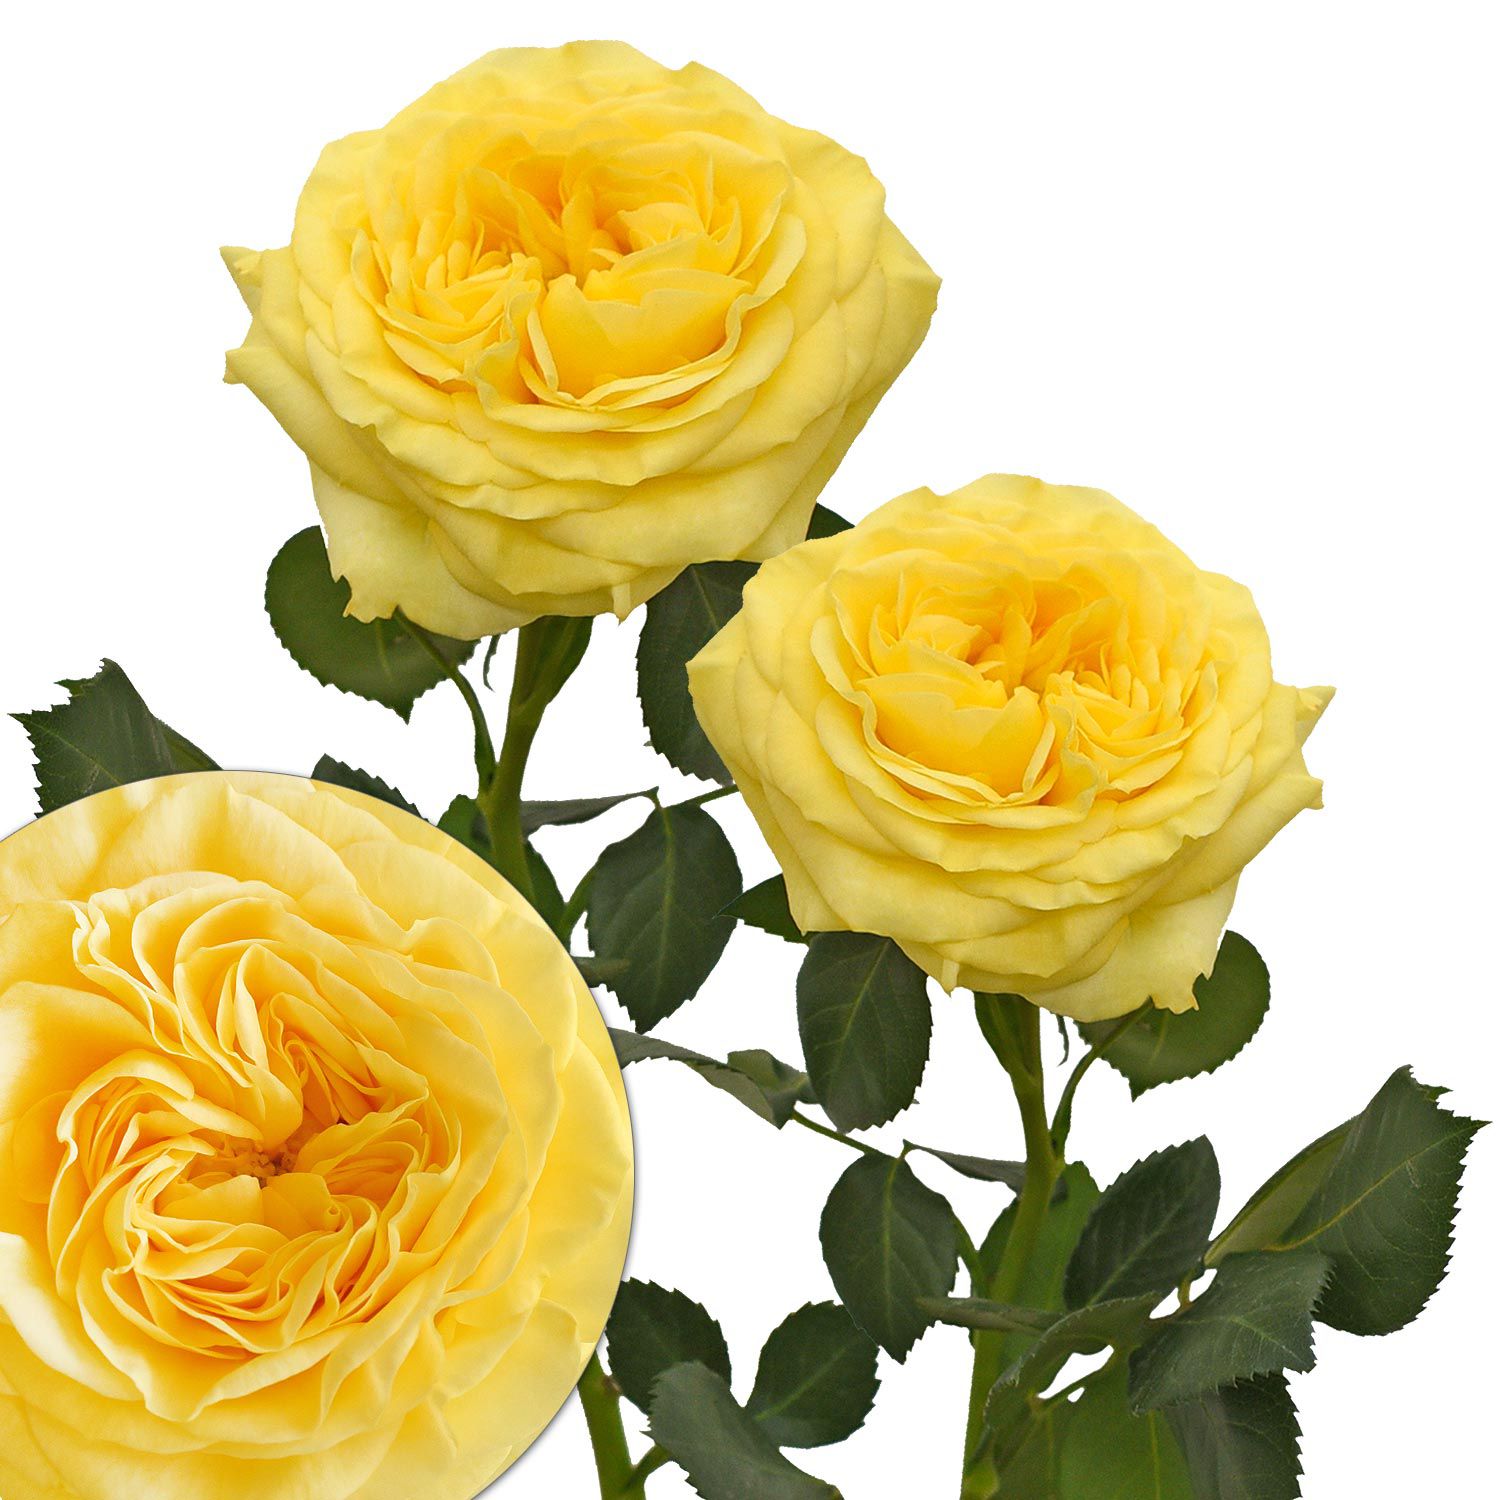 Yellow Garden Roses, 36 Stems